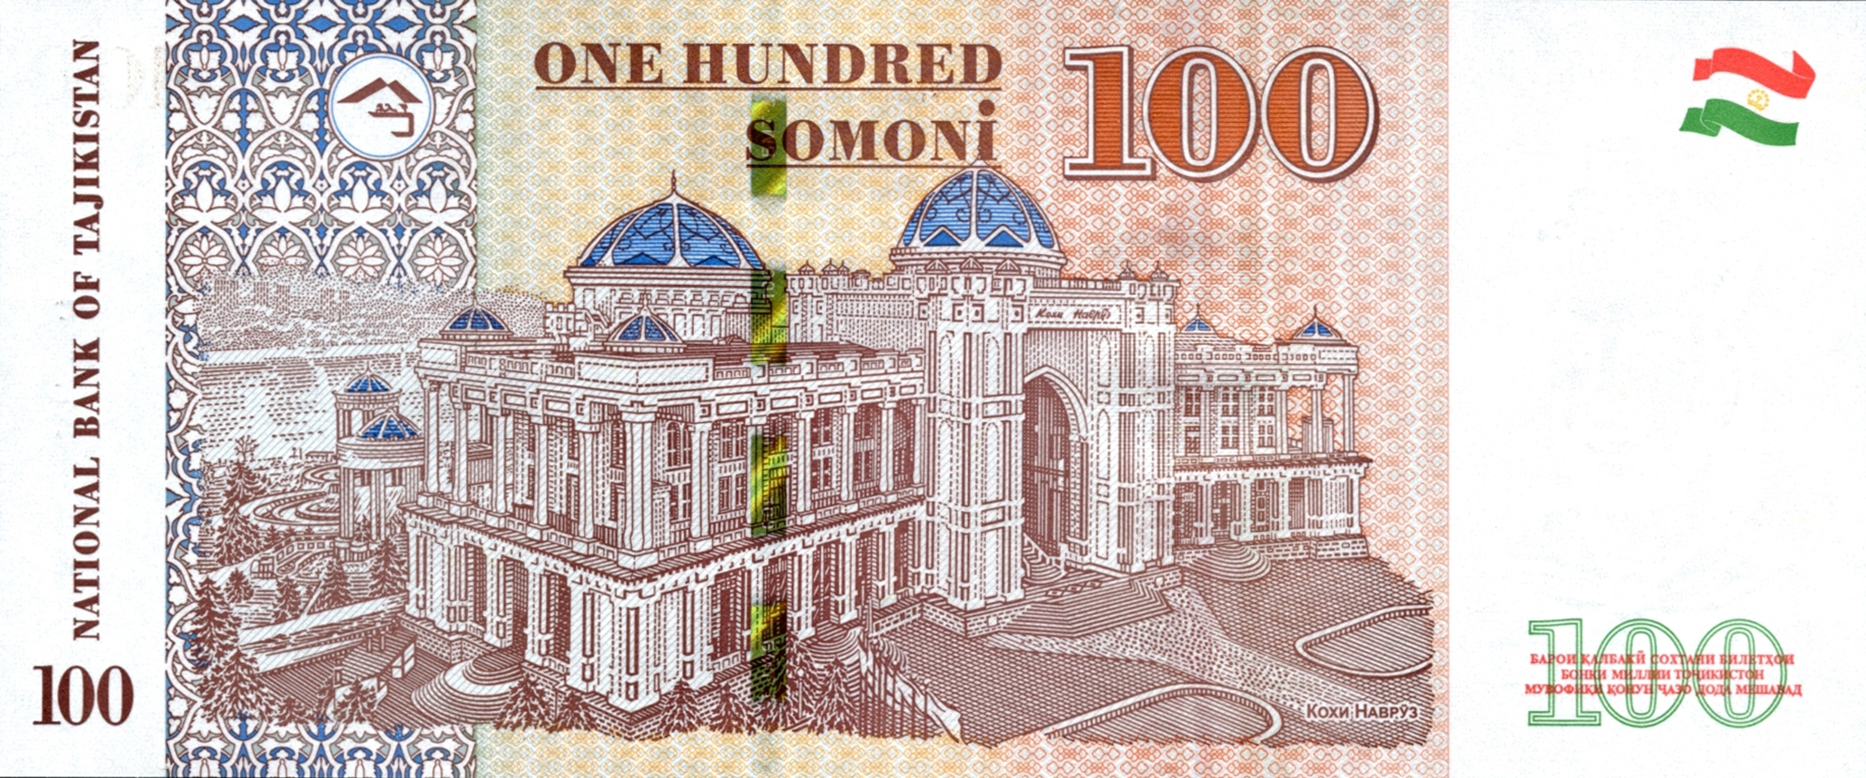 100 на таджикский. Купюра Таджикистана 500 Сомони. Банкноты Таджикистана 100. Купюра 100 Таджикистан. 10 Сомони Таджикистан купюра.